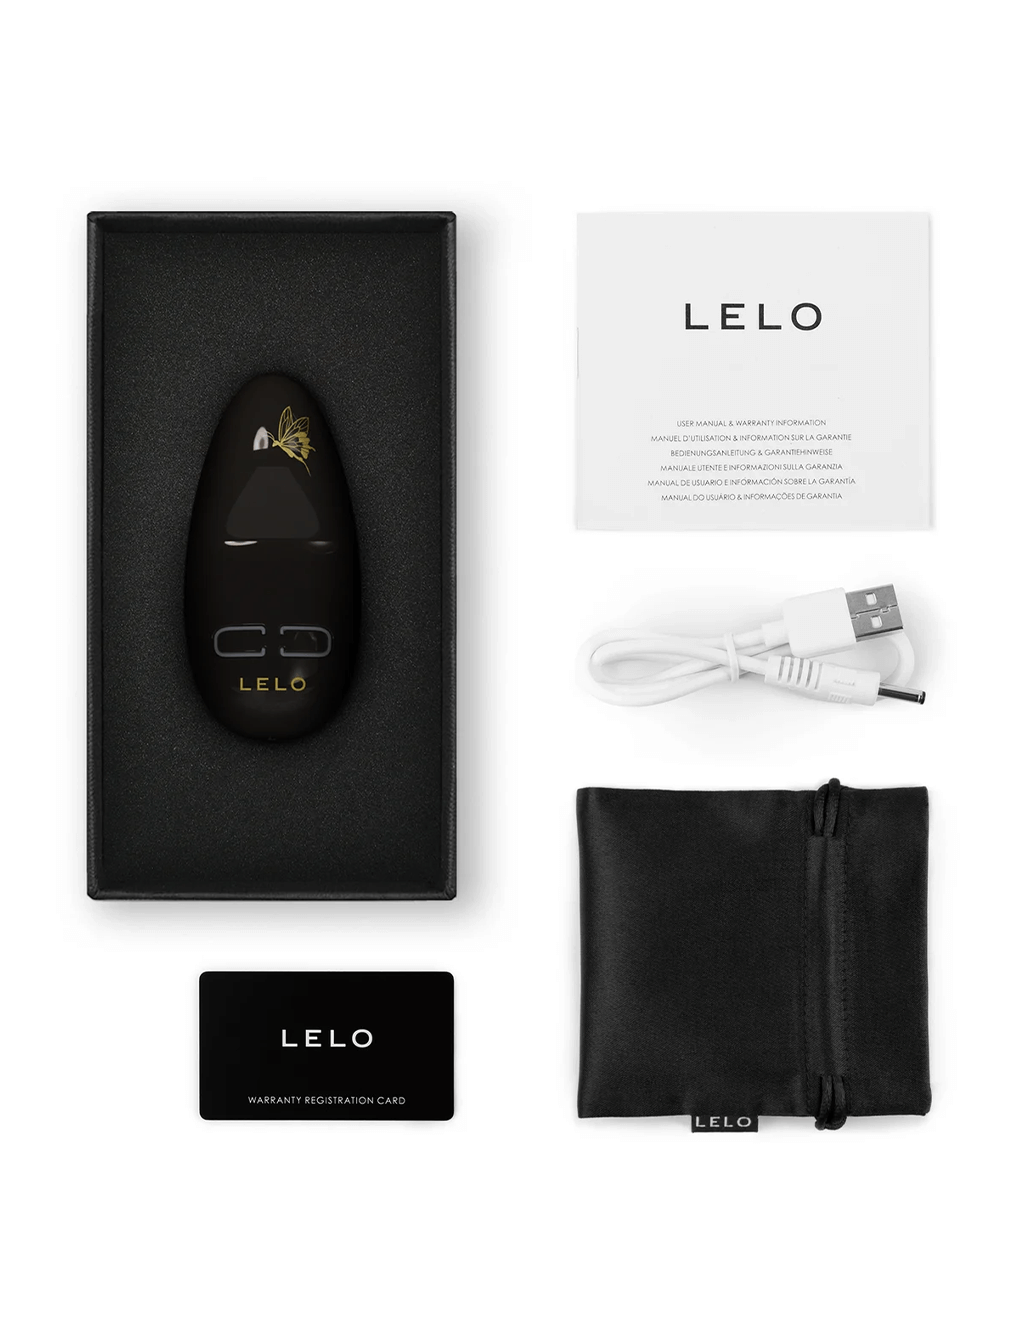 Lelo Nea 3 Included in Box